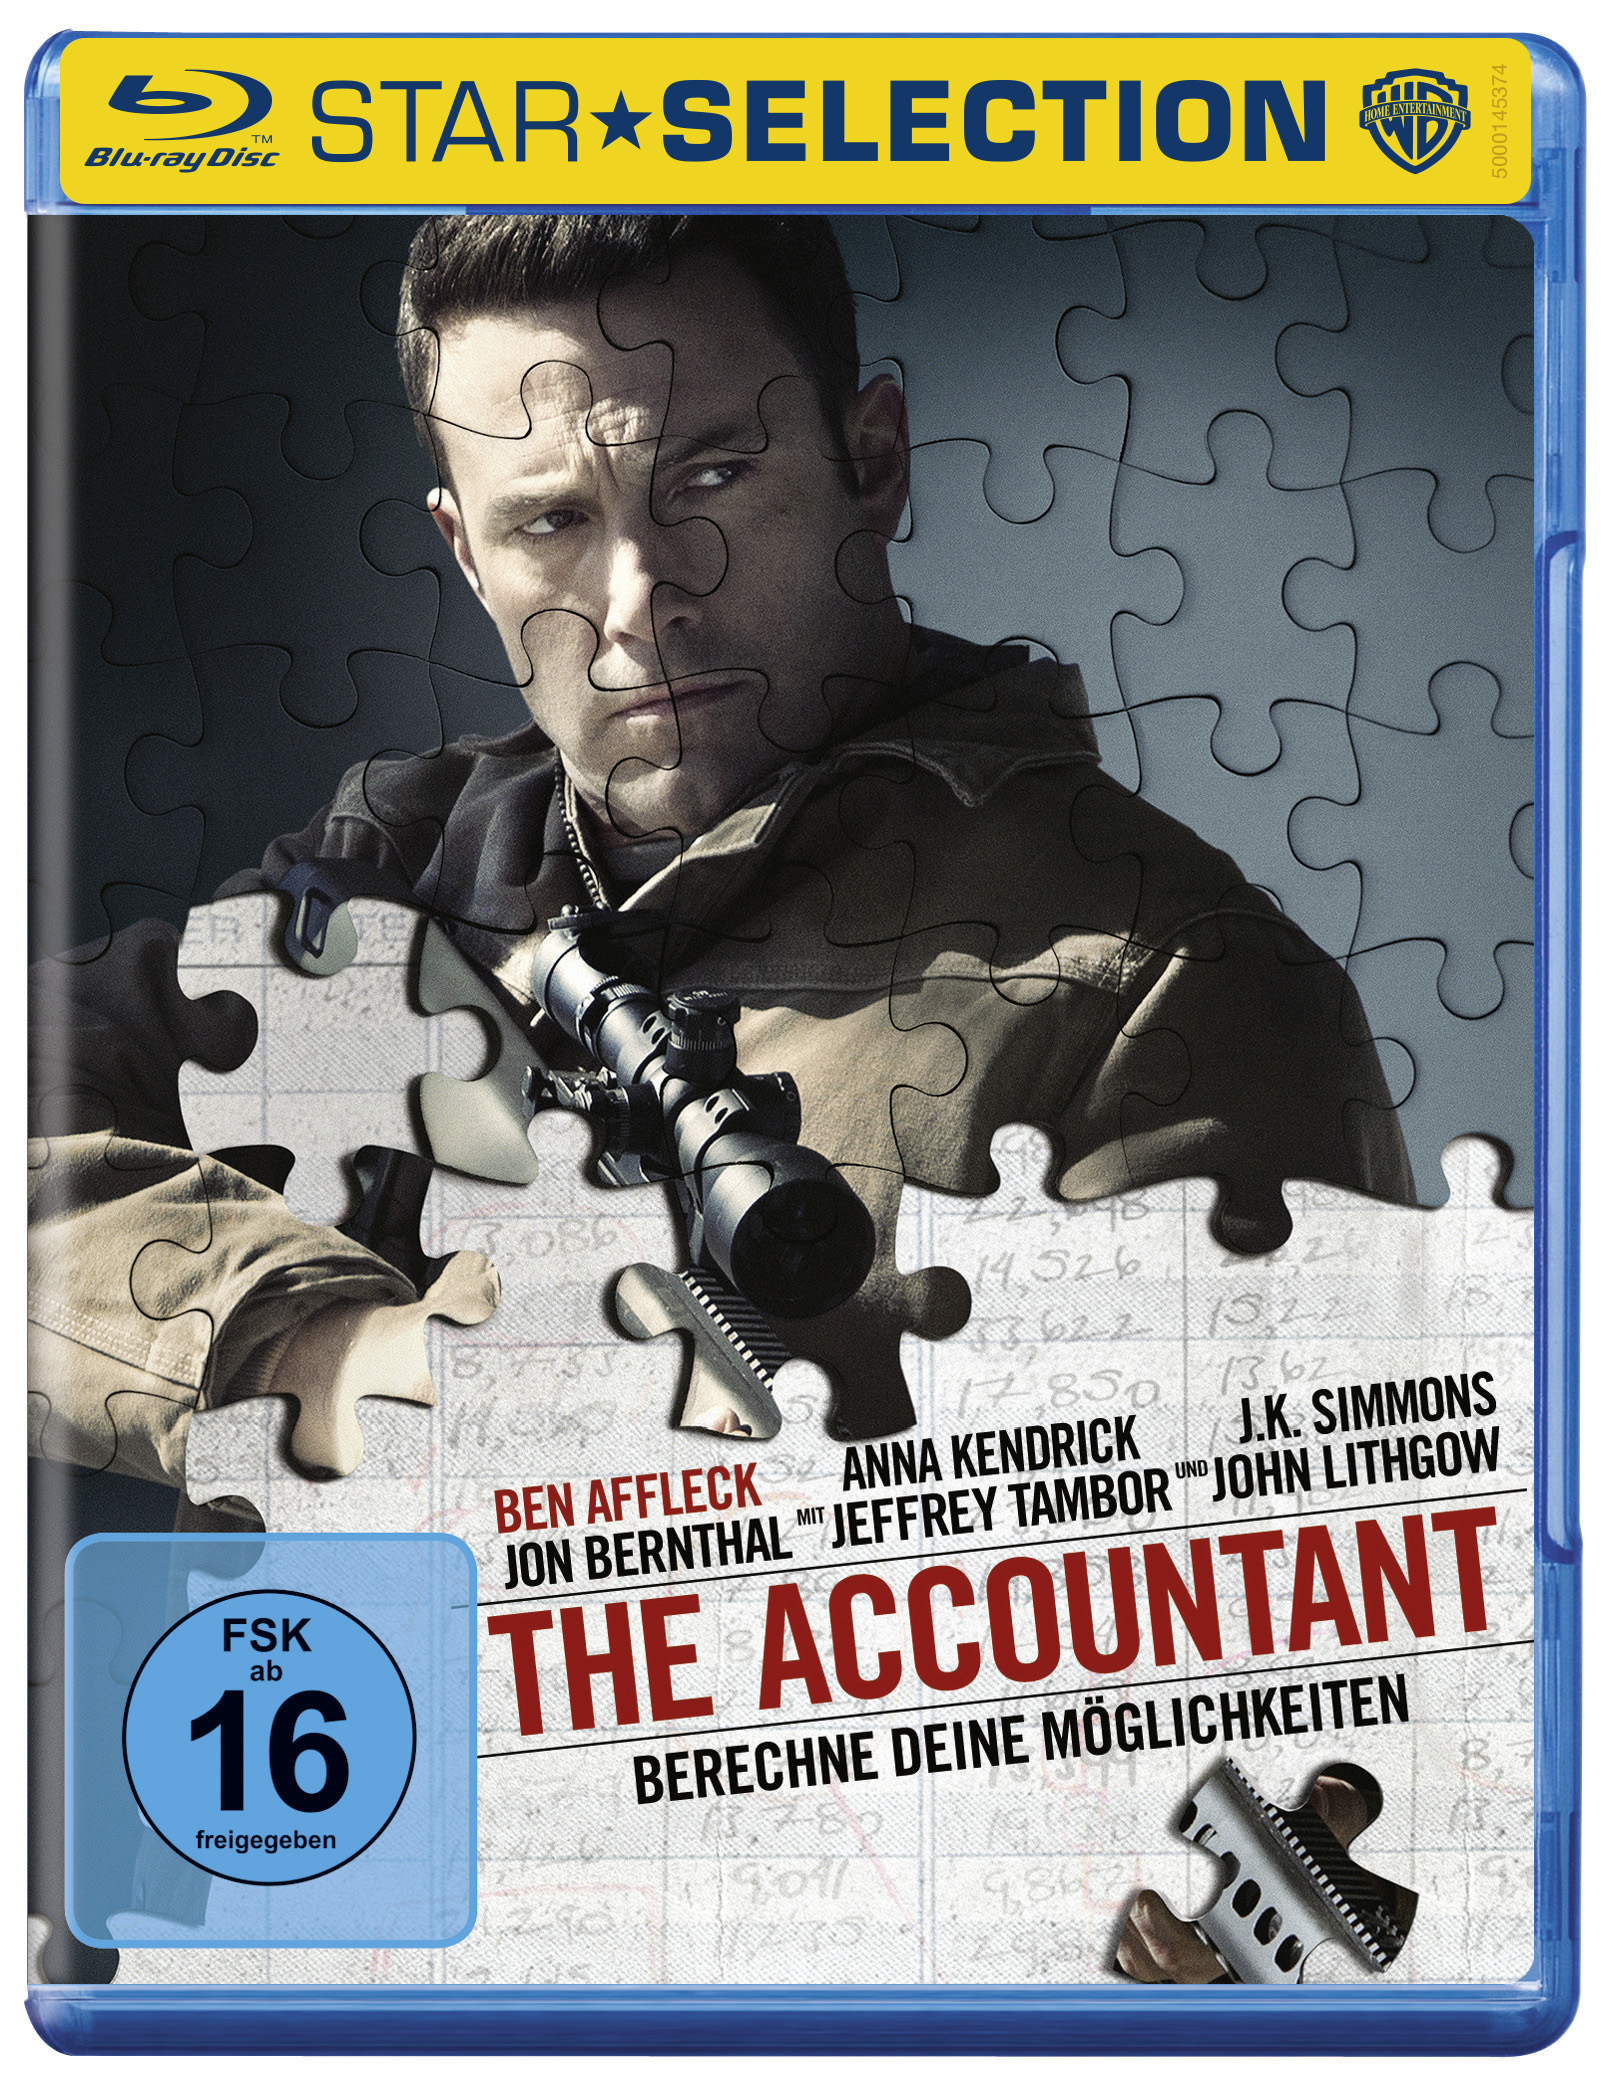 The Blu-ray Accountant